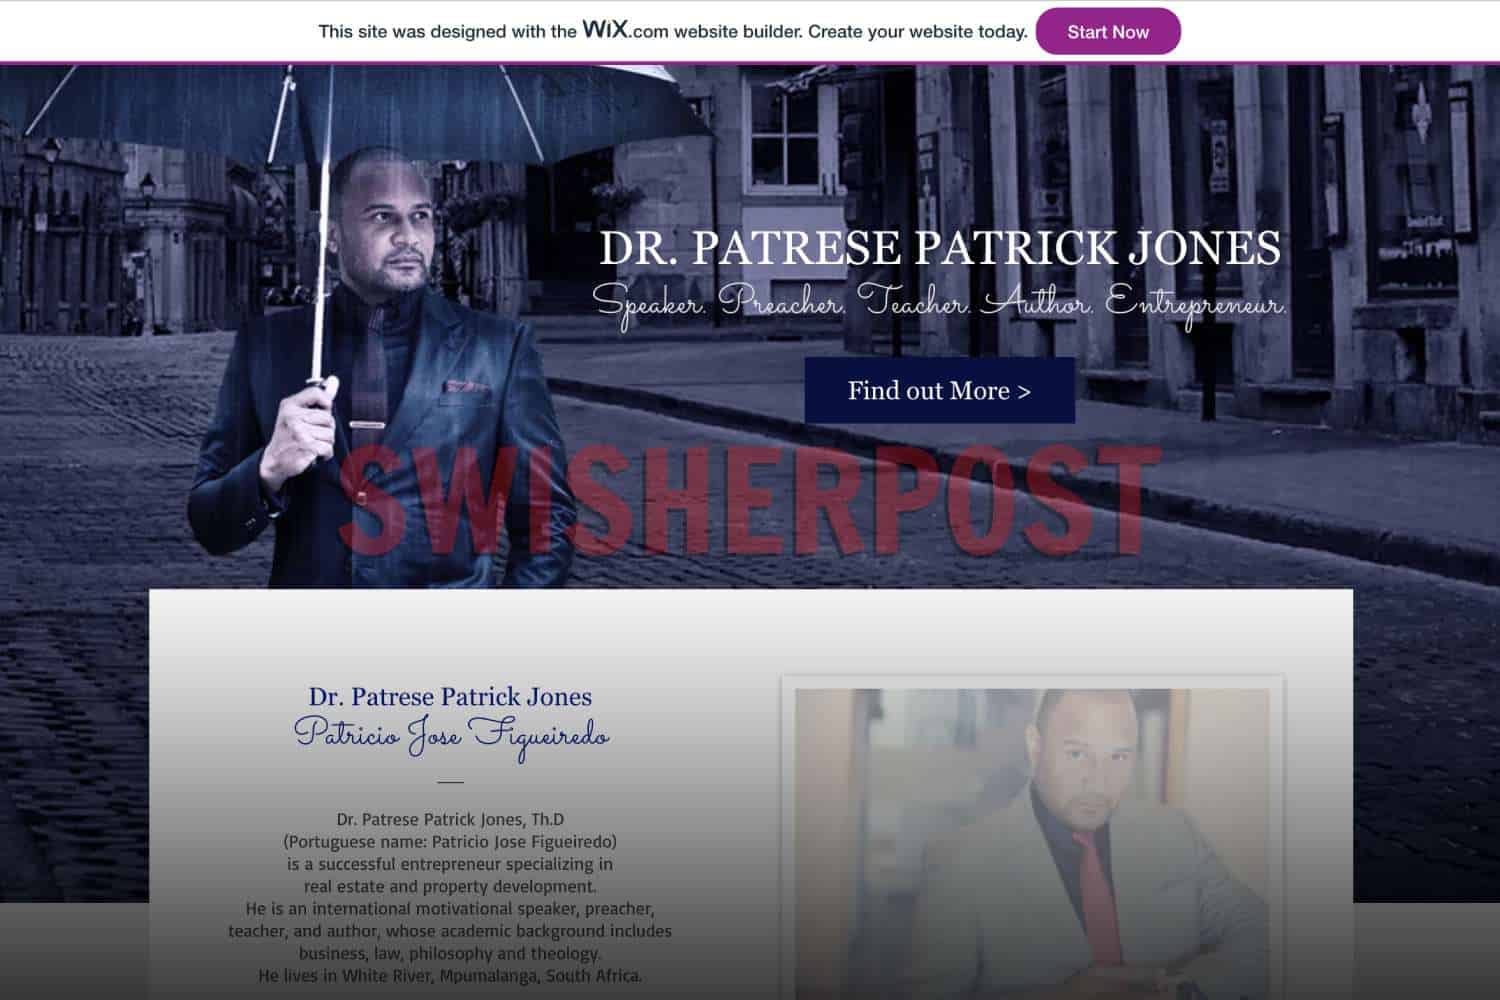 Patrick patrese jones website